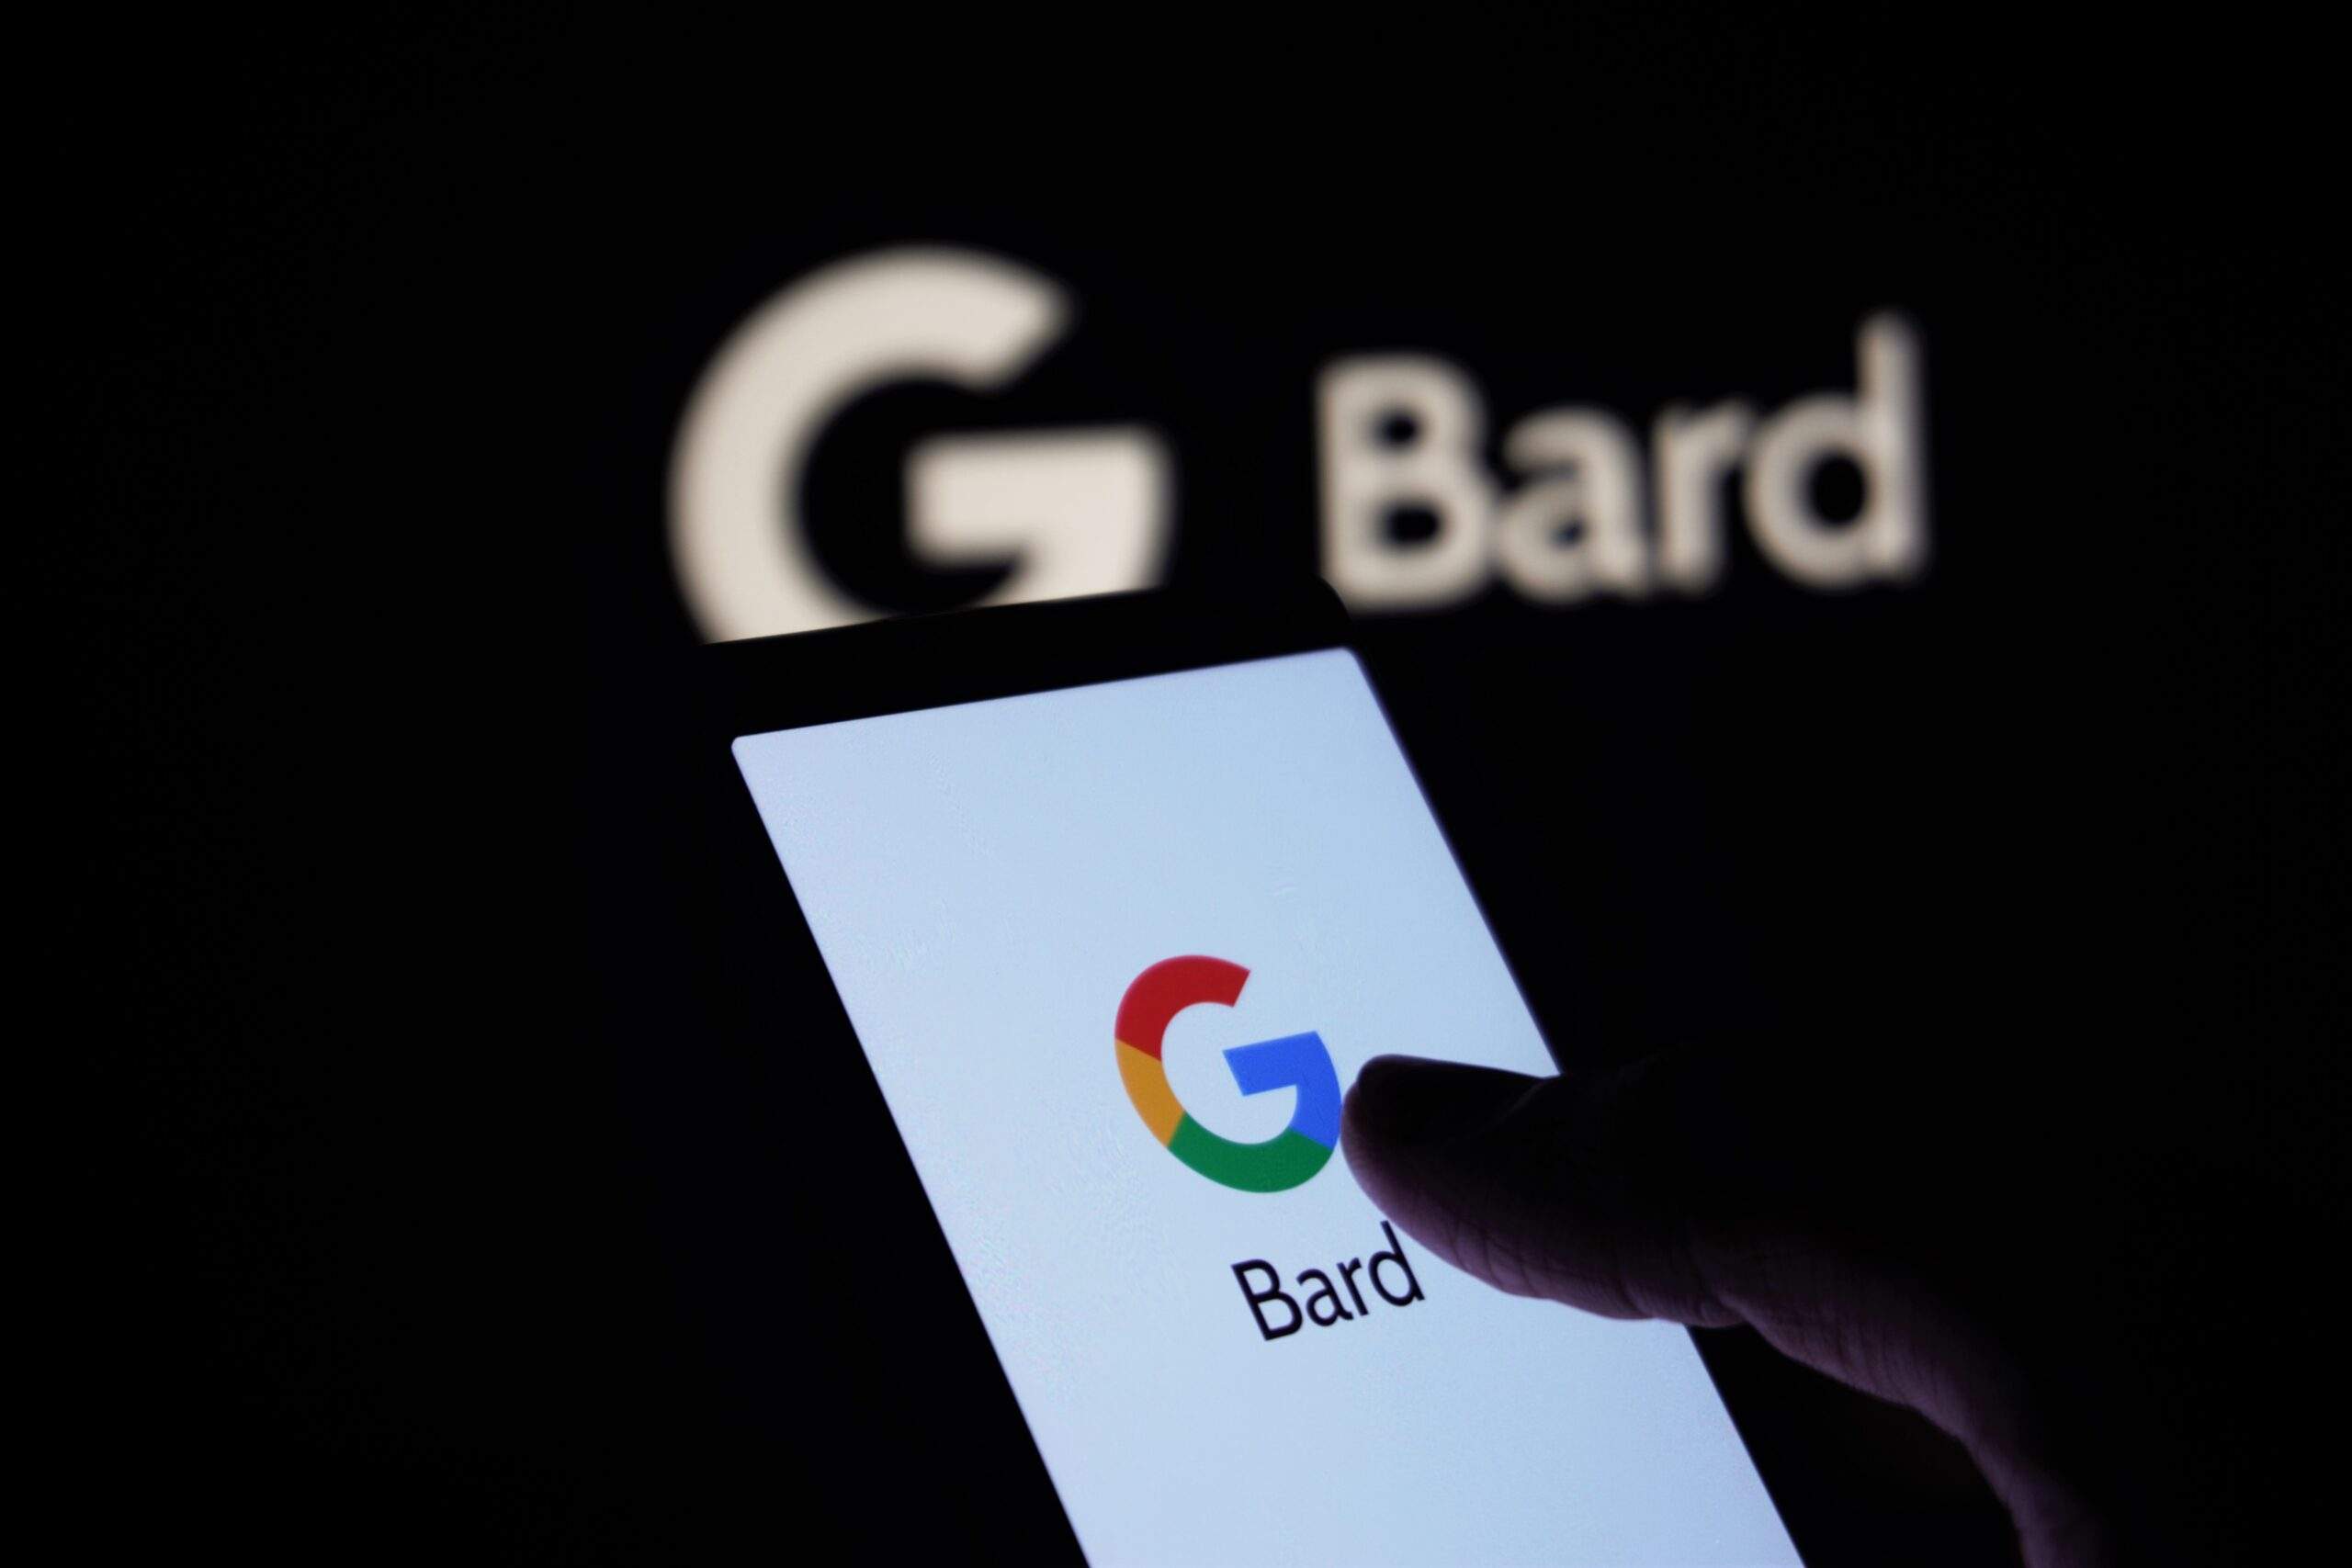 Google's Bard AI Win Turing Test, Marking a Milestone